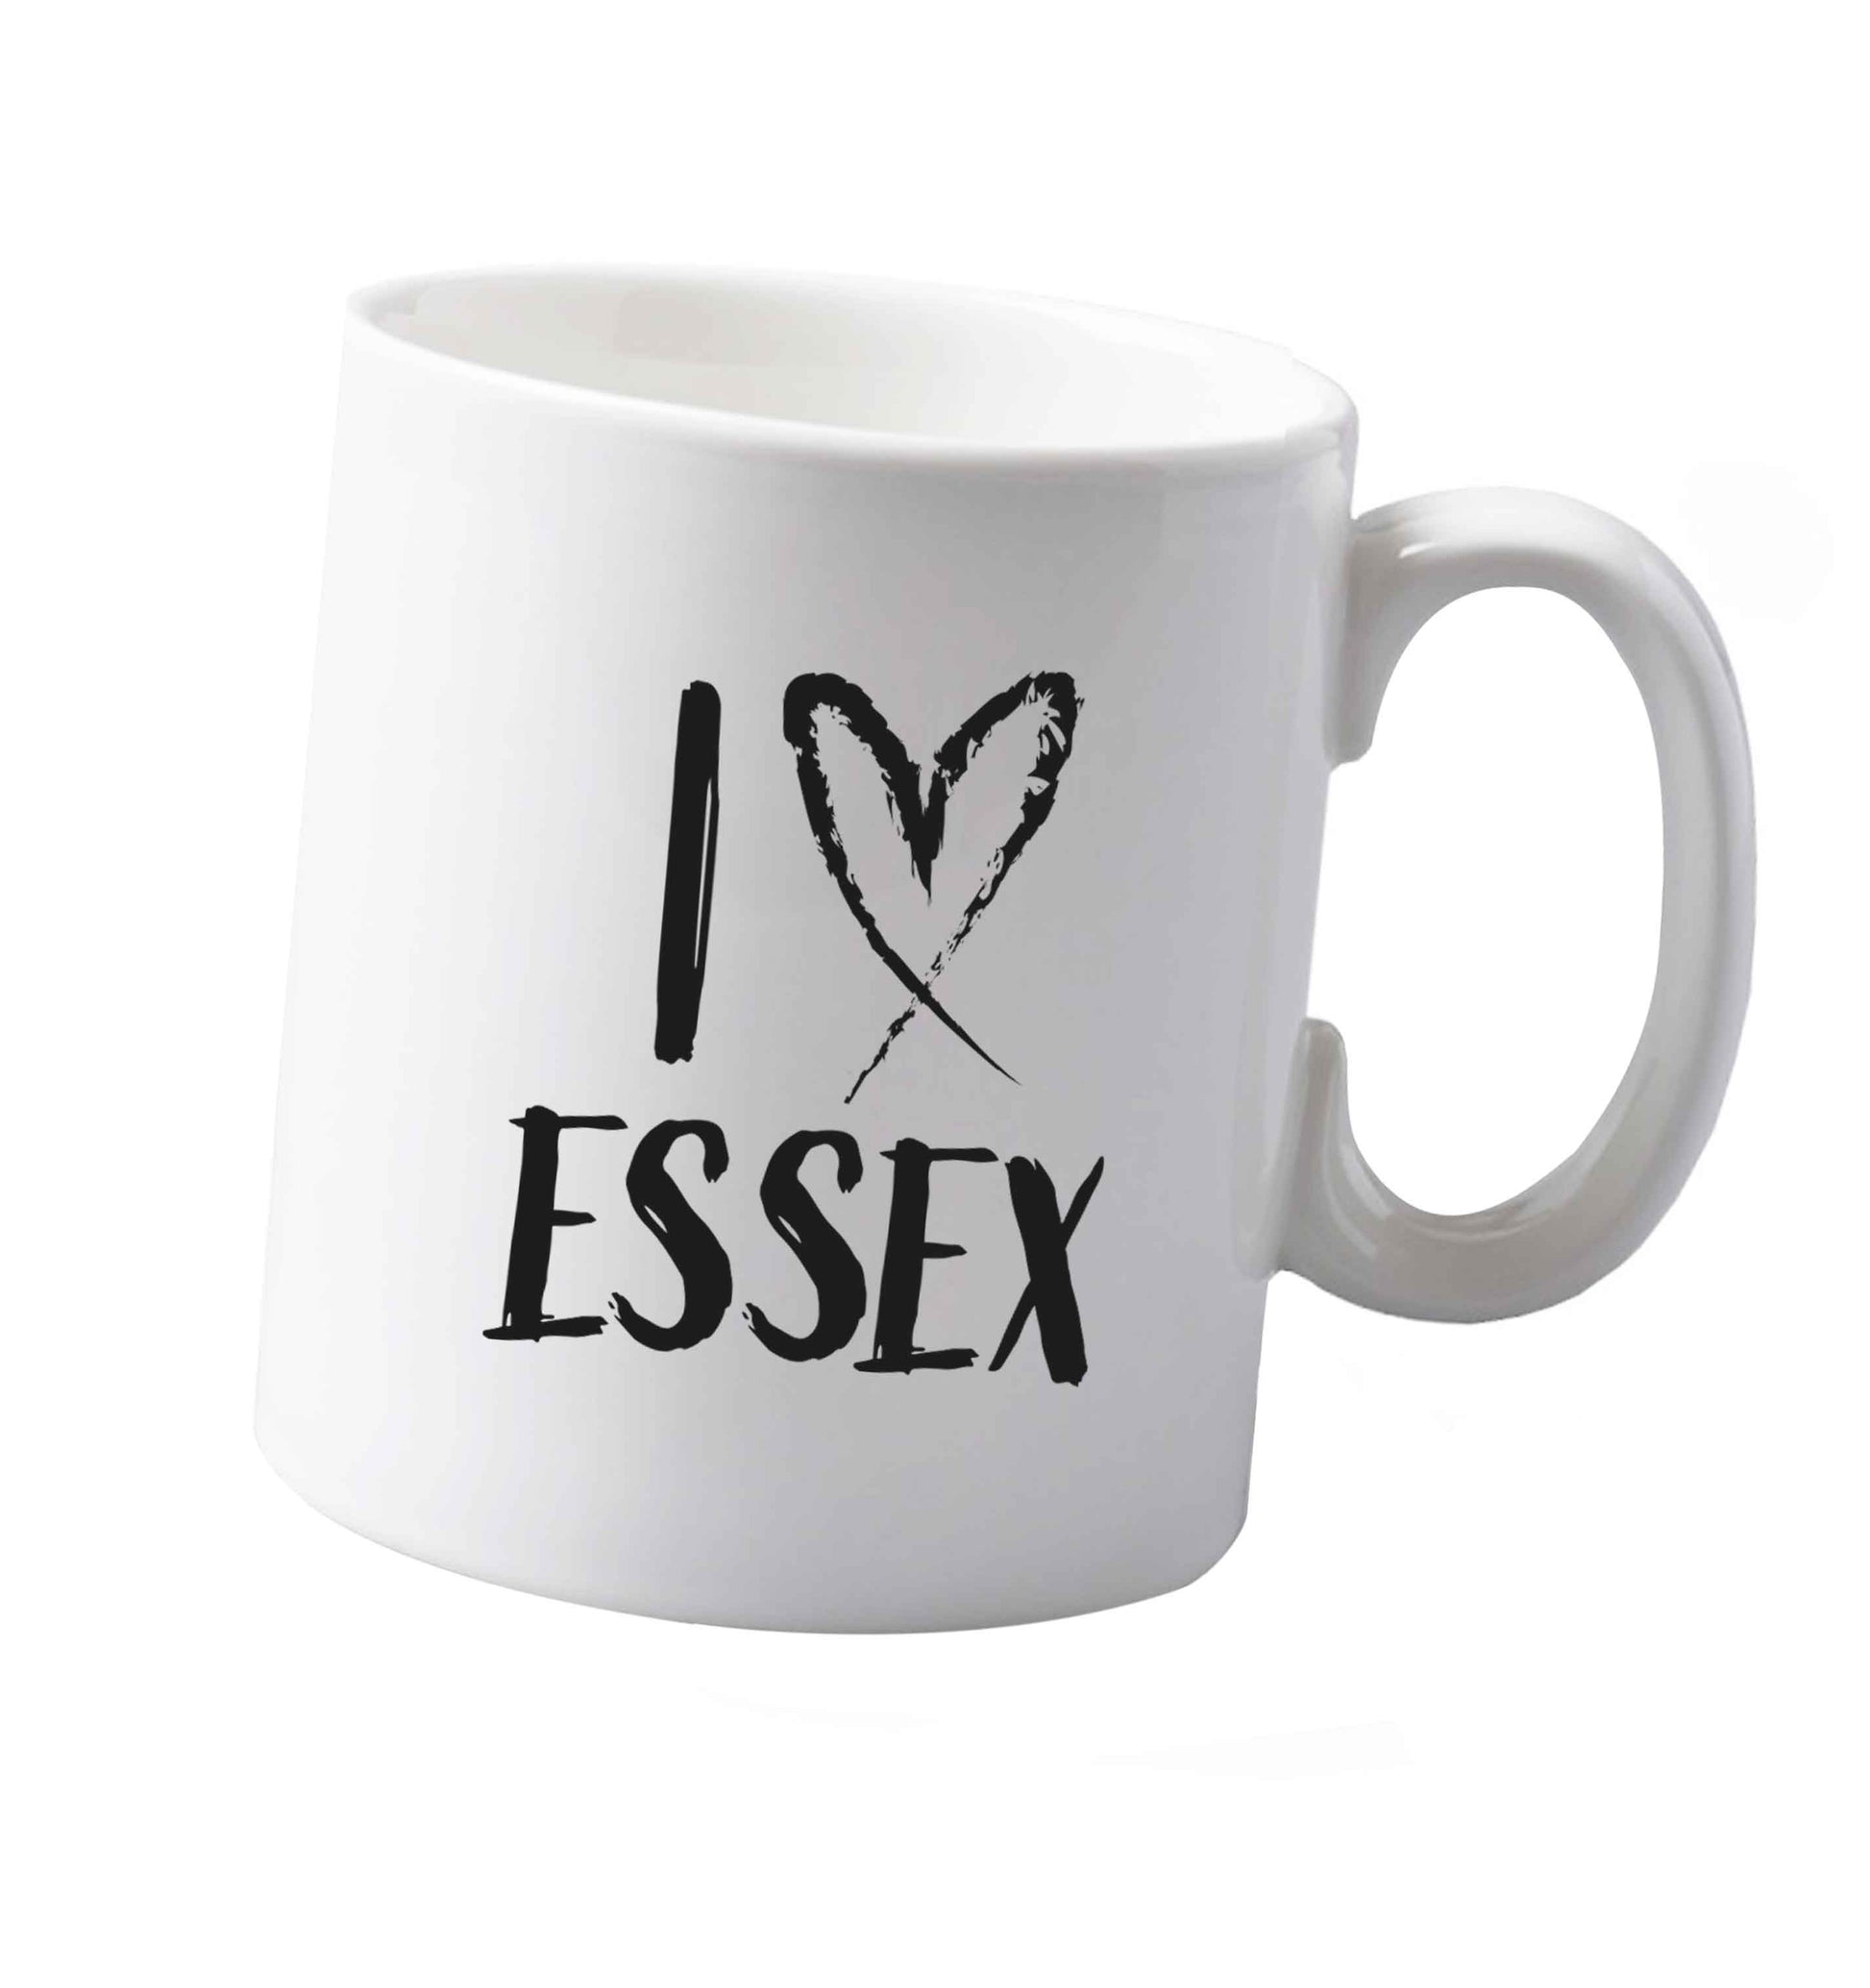 10 oz I love Essex ceramic mug both sides